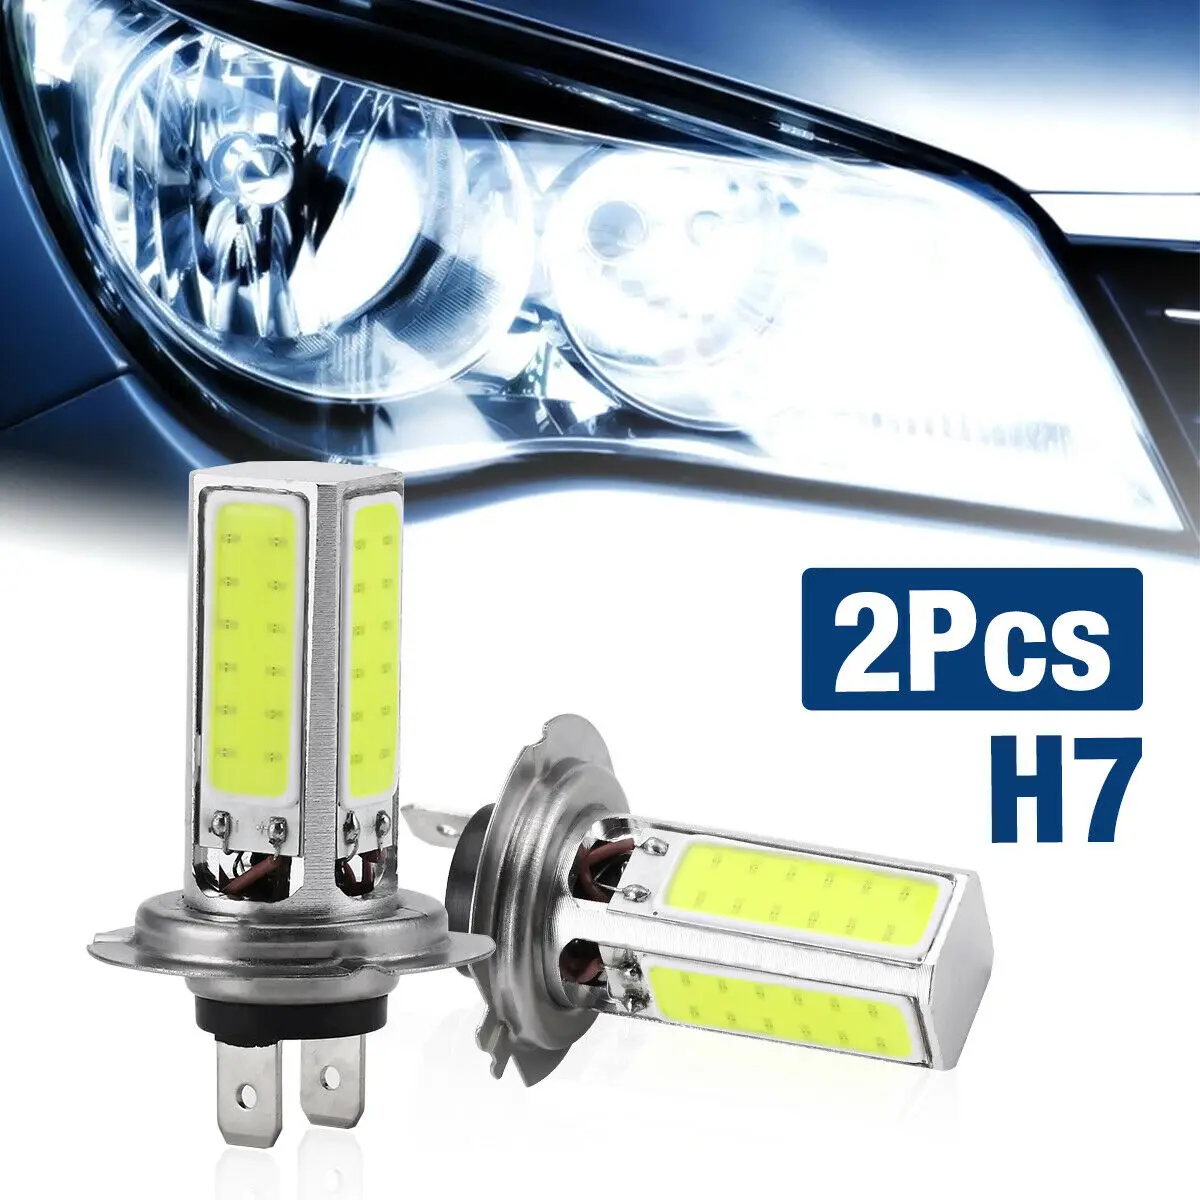 2x H7 COB LED Headlight Bulbs Kit Fog Light High Low Beam Super Bright White DRL H4 H8 H9 H11 9005 9006 Lamps For Car 12V 6000K